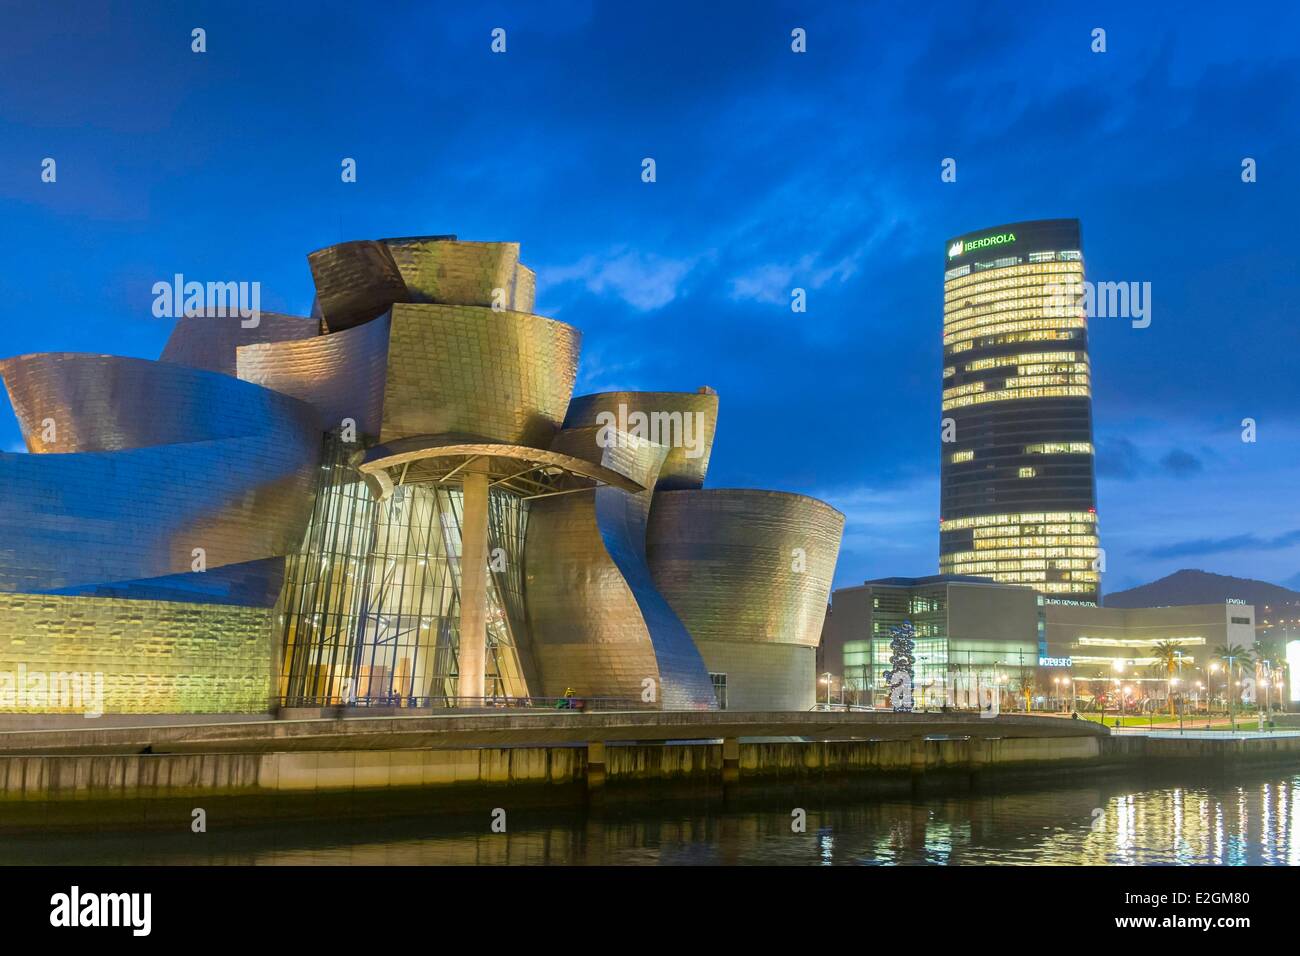 Spain Basque Country Region Vizcaya Province Bilbao Guggenheim Museum ...